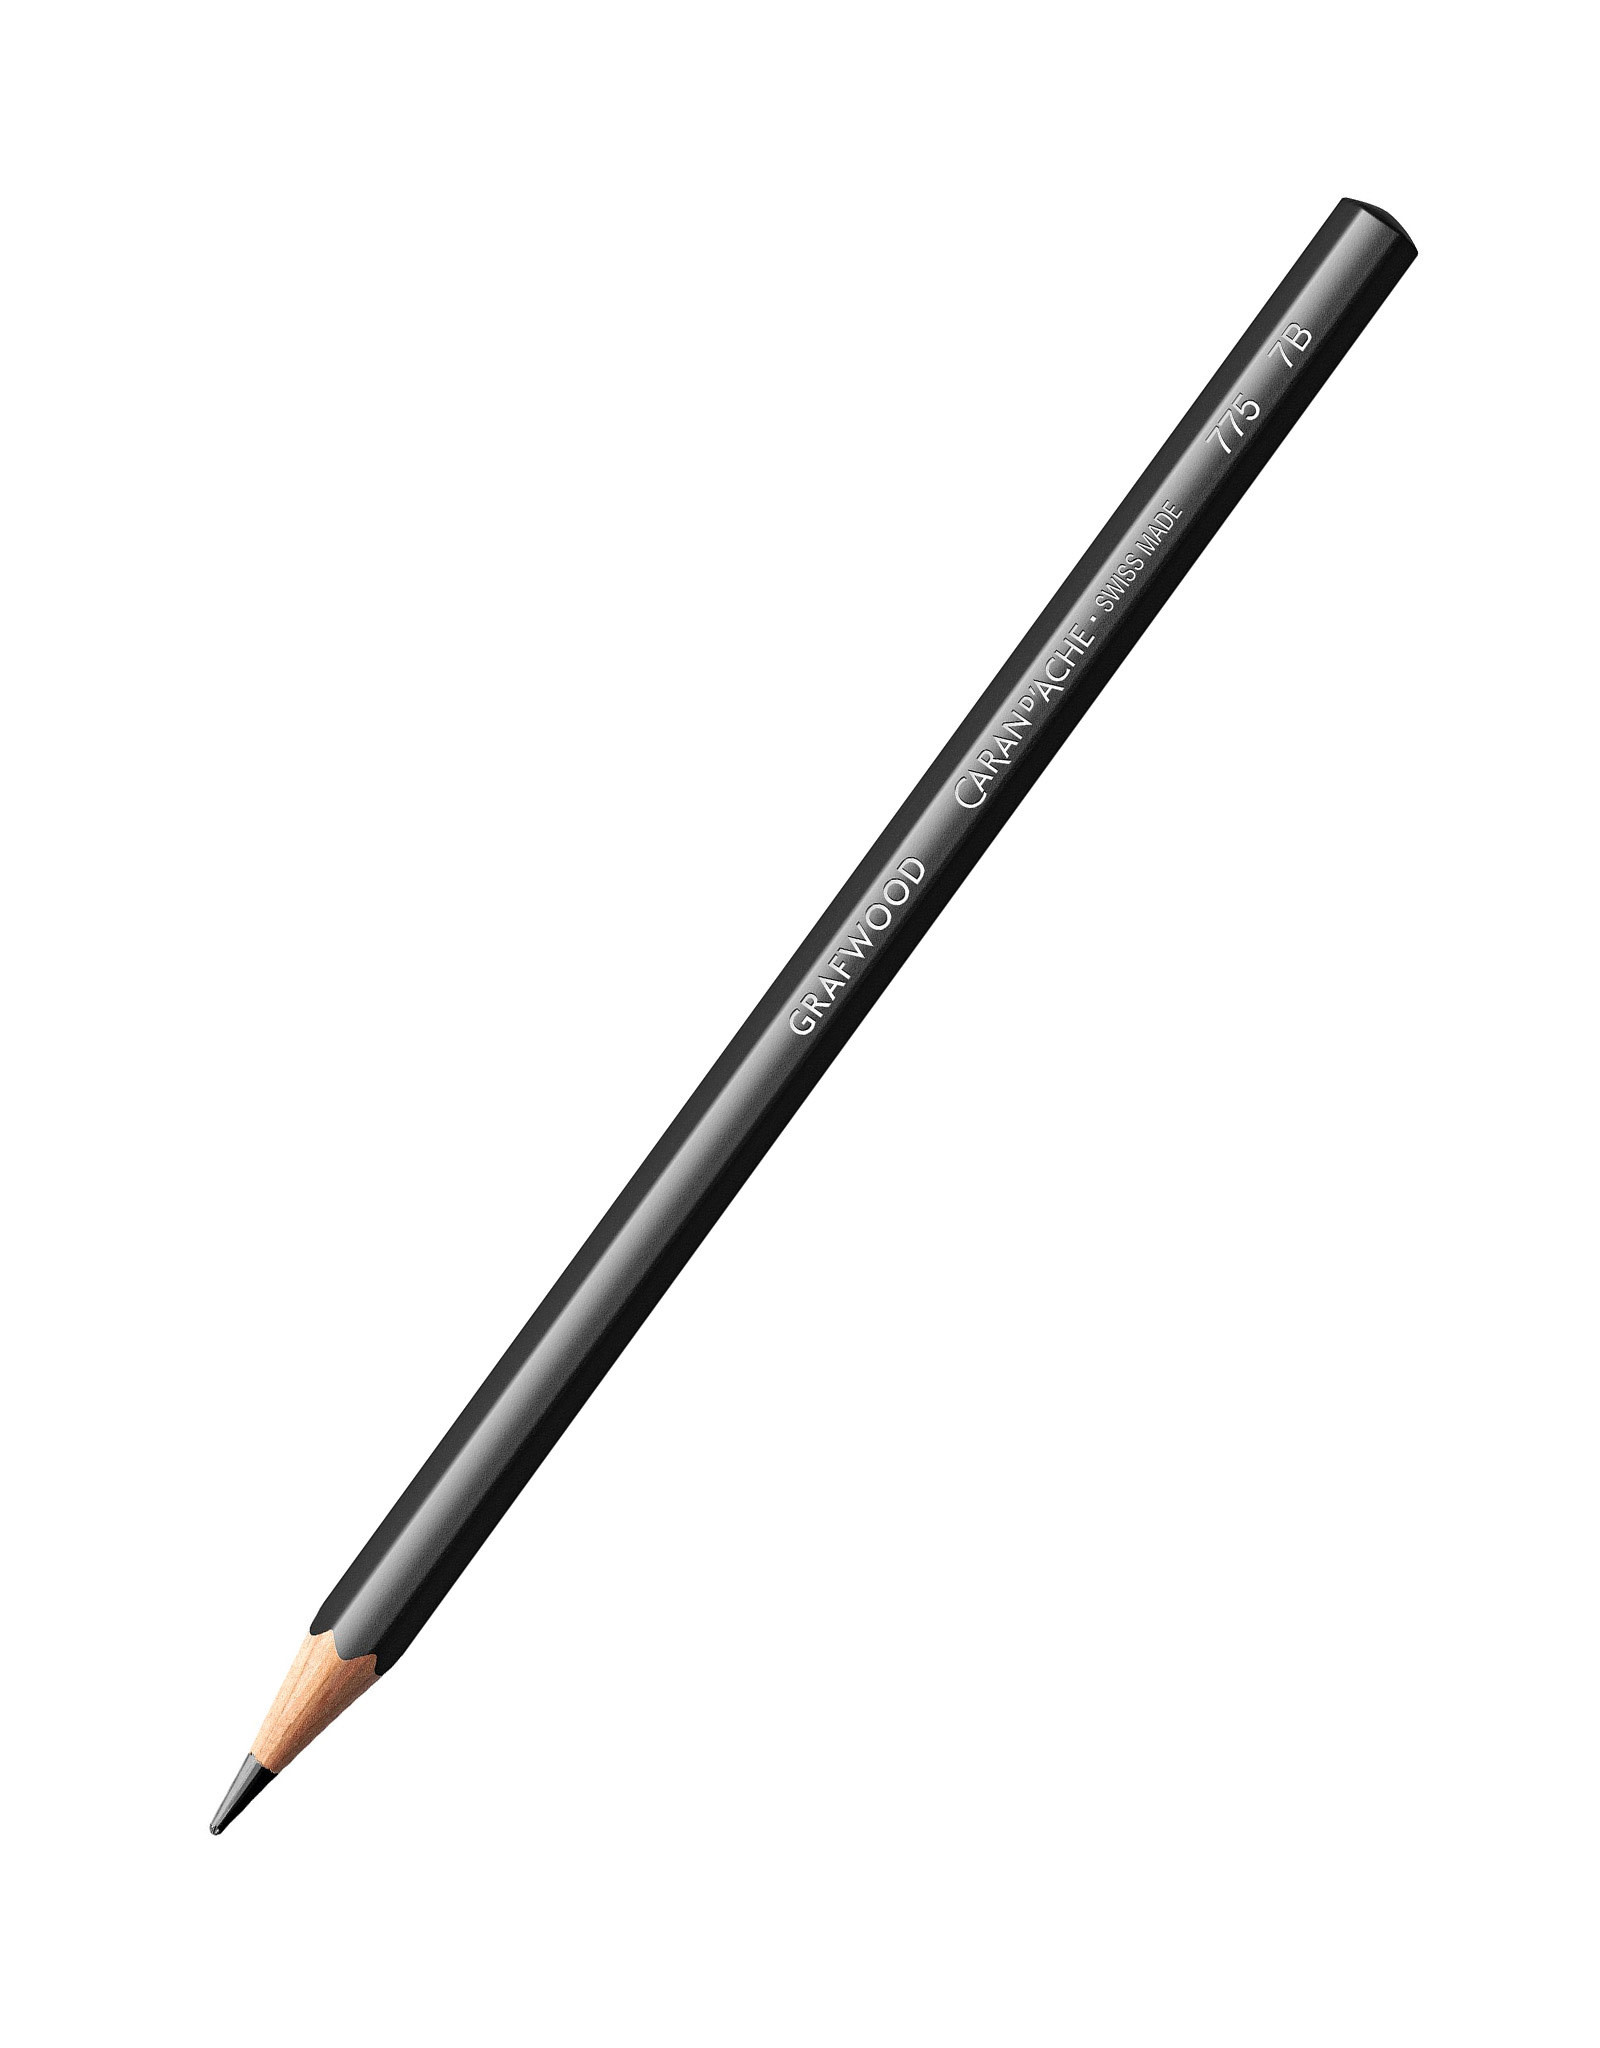 Caran d'Ache Grafwood Graphite Pencil, 7B